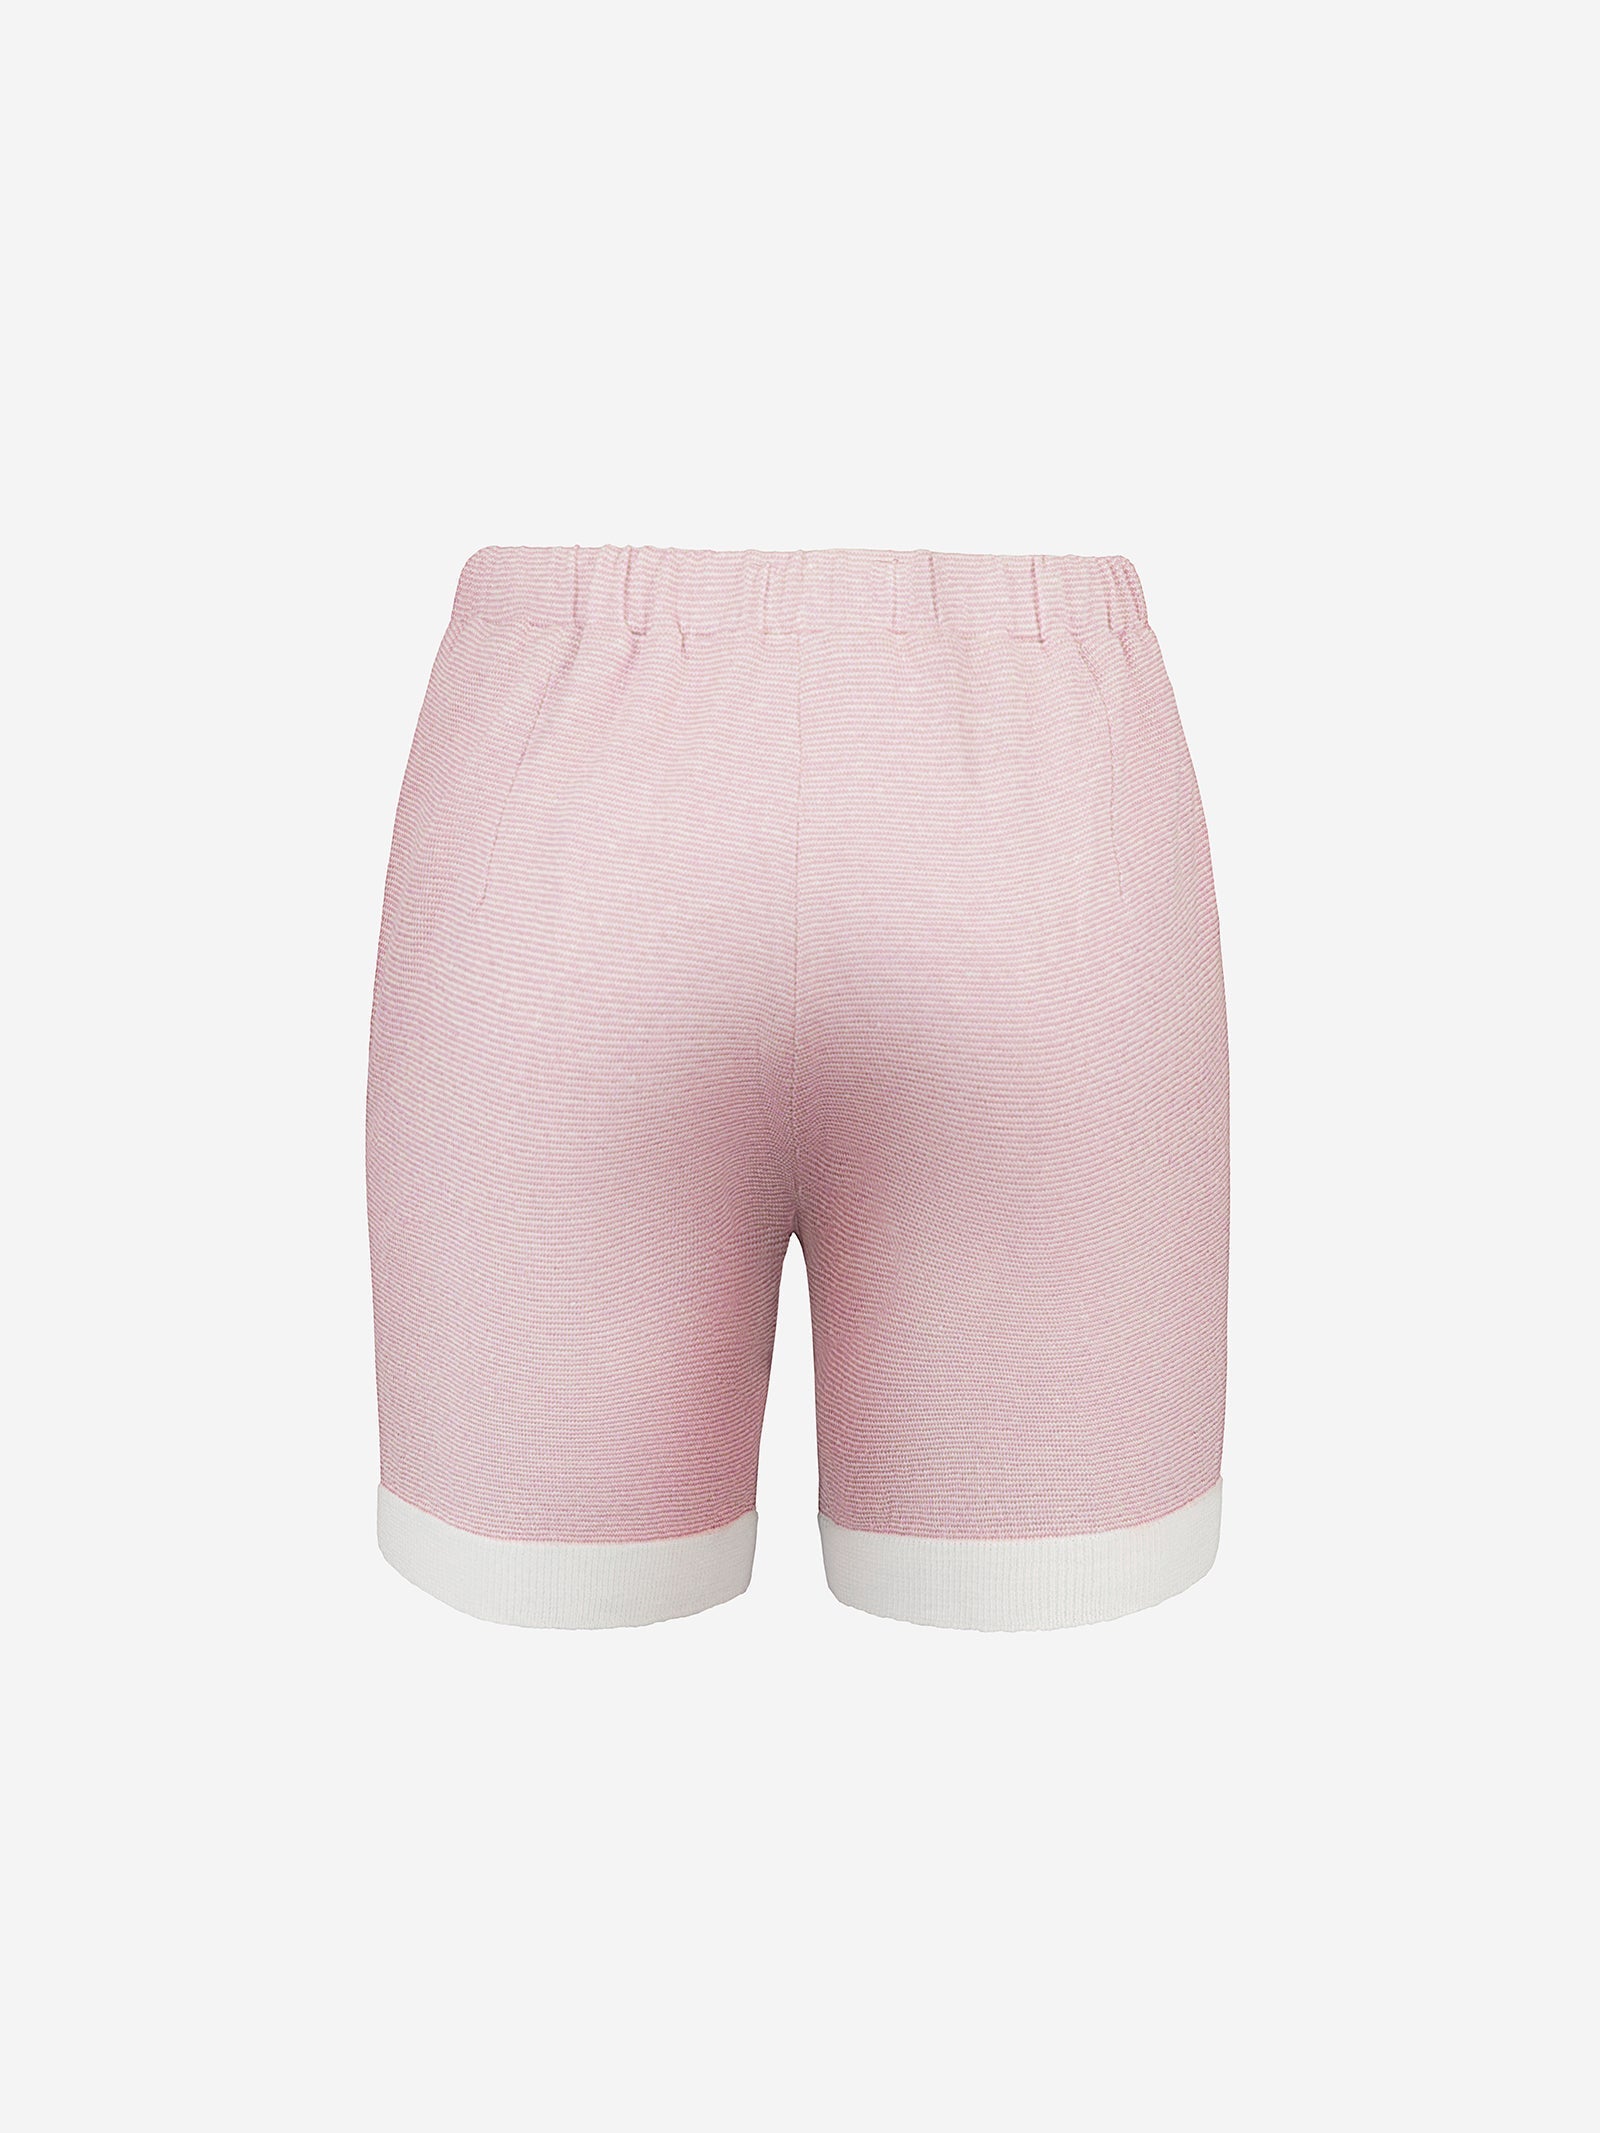 Short Brio 100% Capri pink and white linen short back